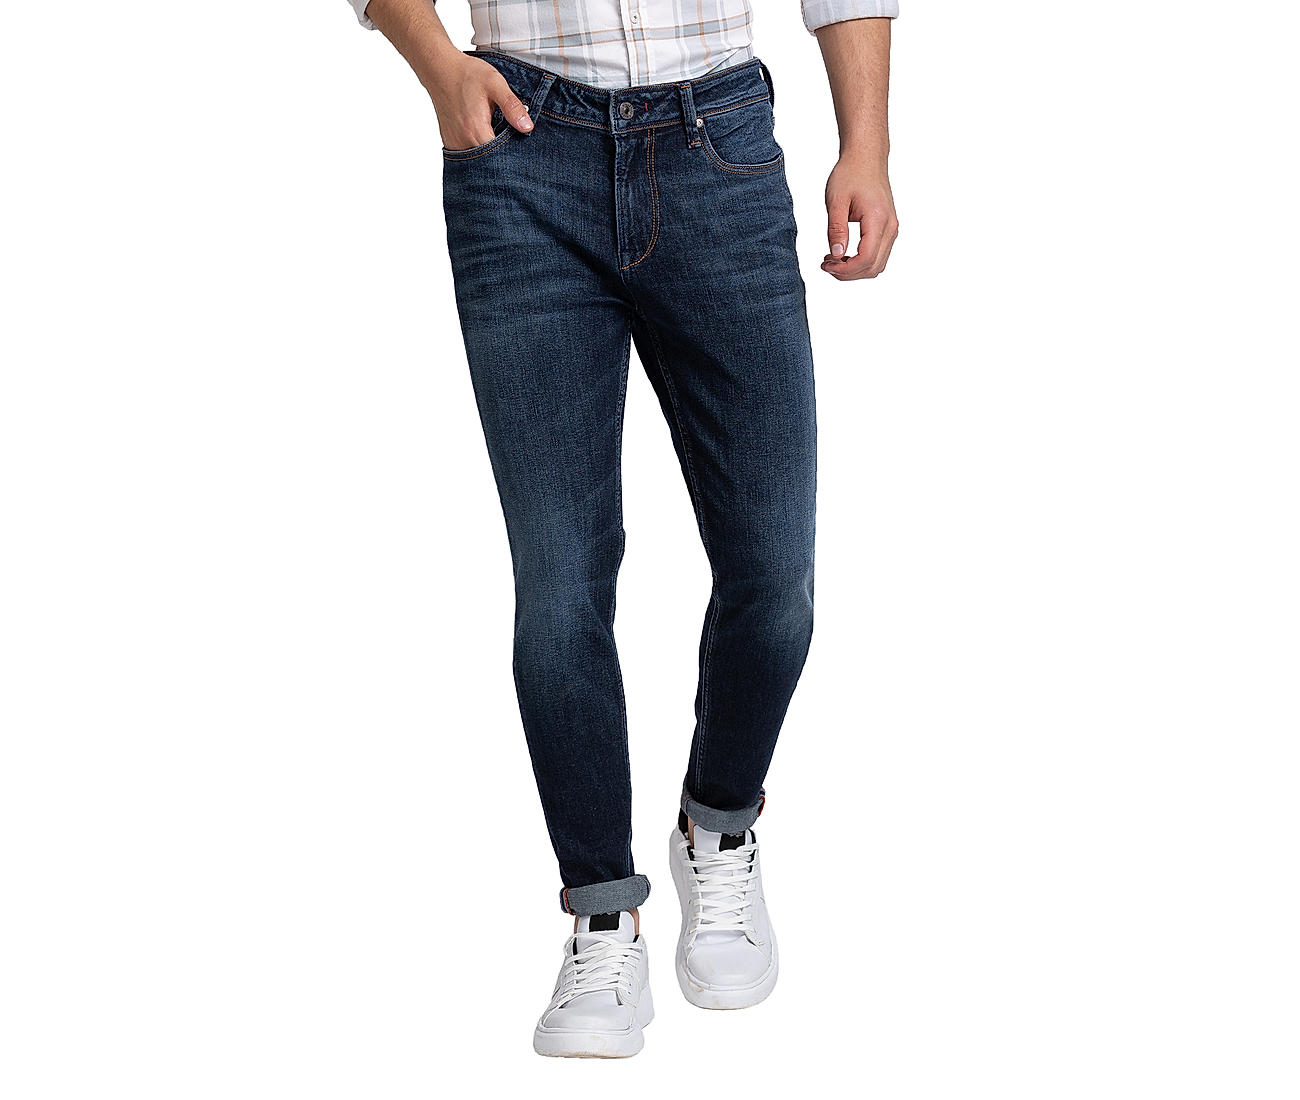 Buy Blue Solid Boot Cut Fit Jeans for Men Online at Killer Jeans